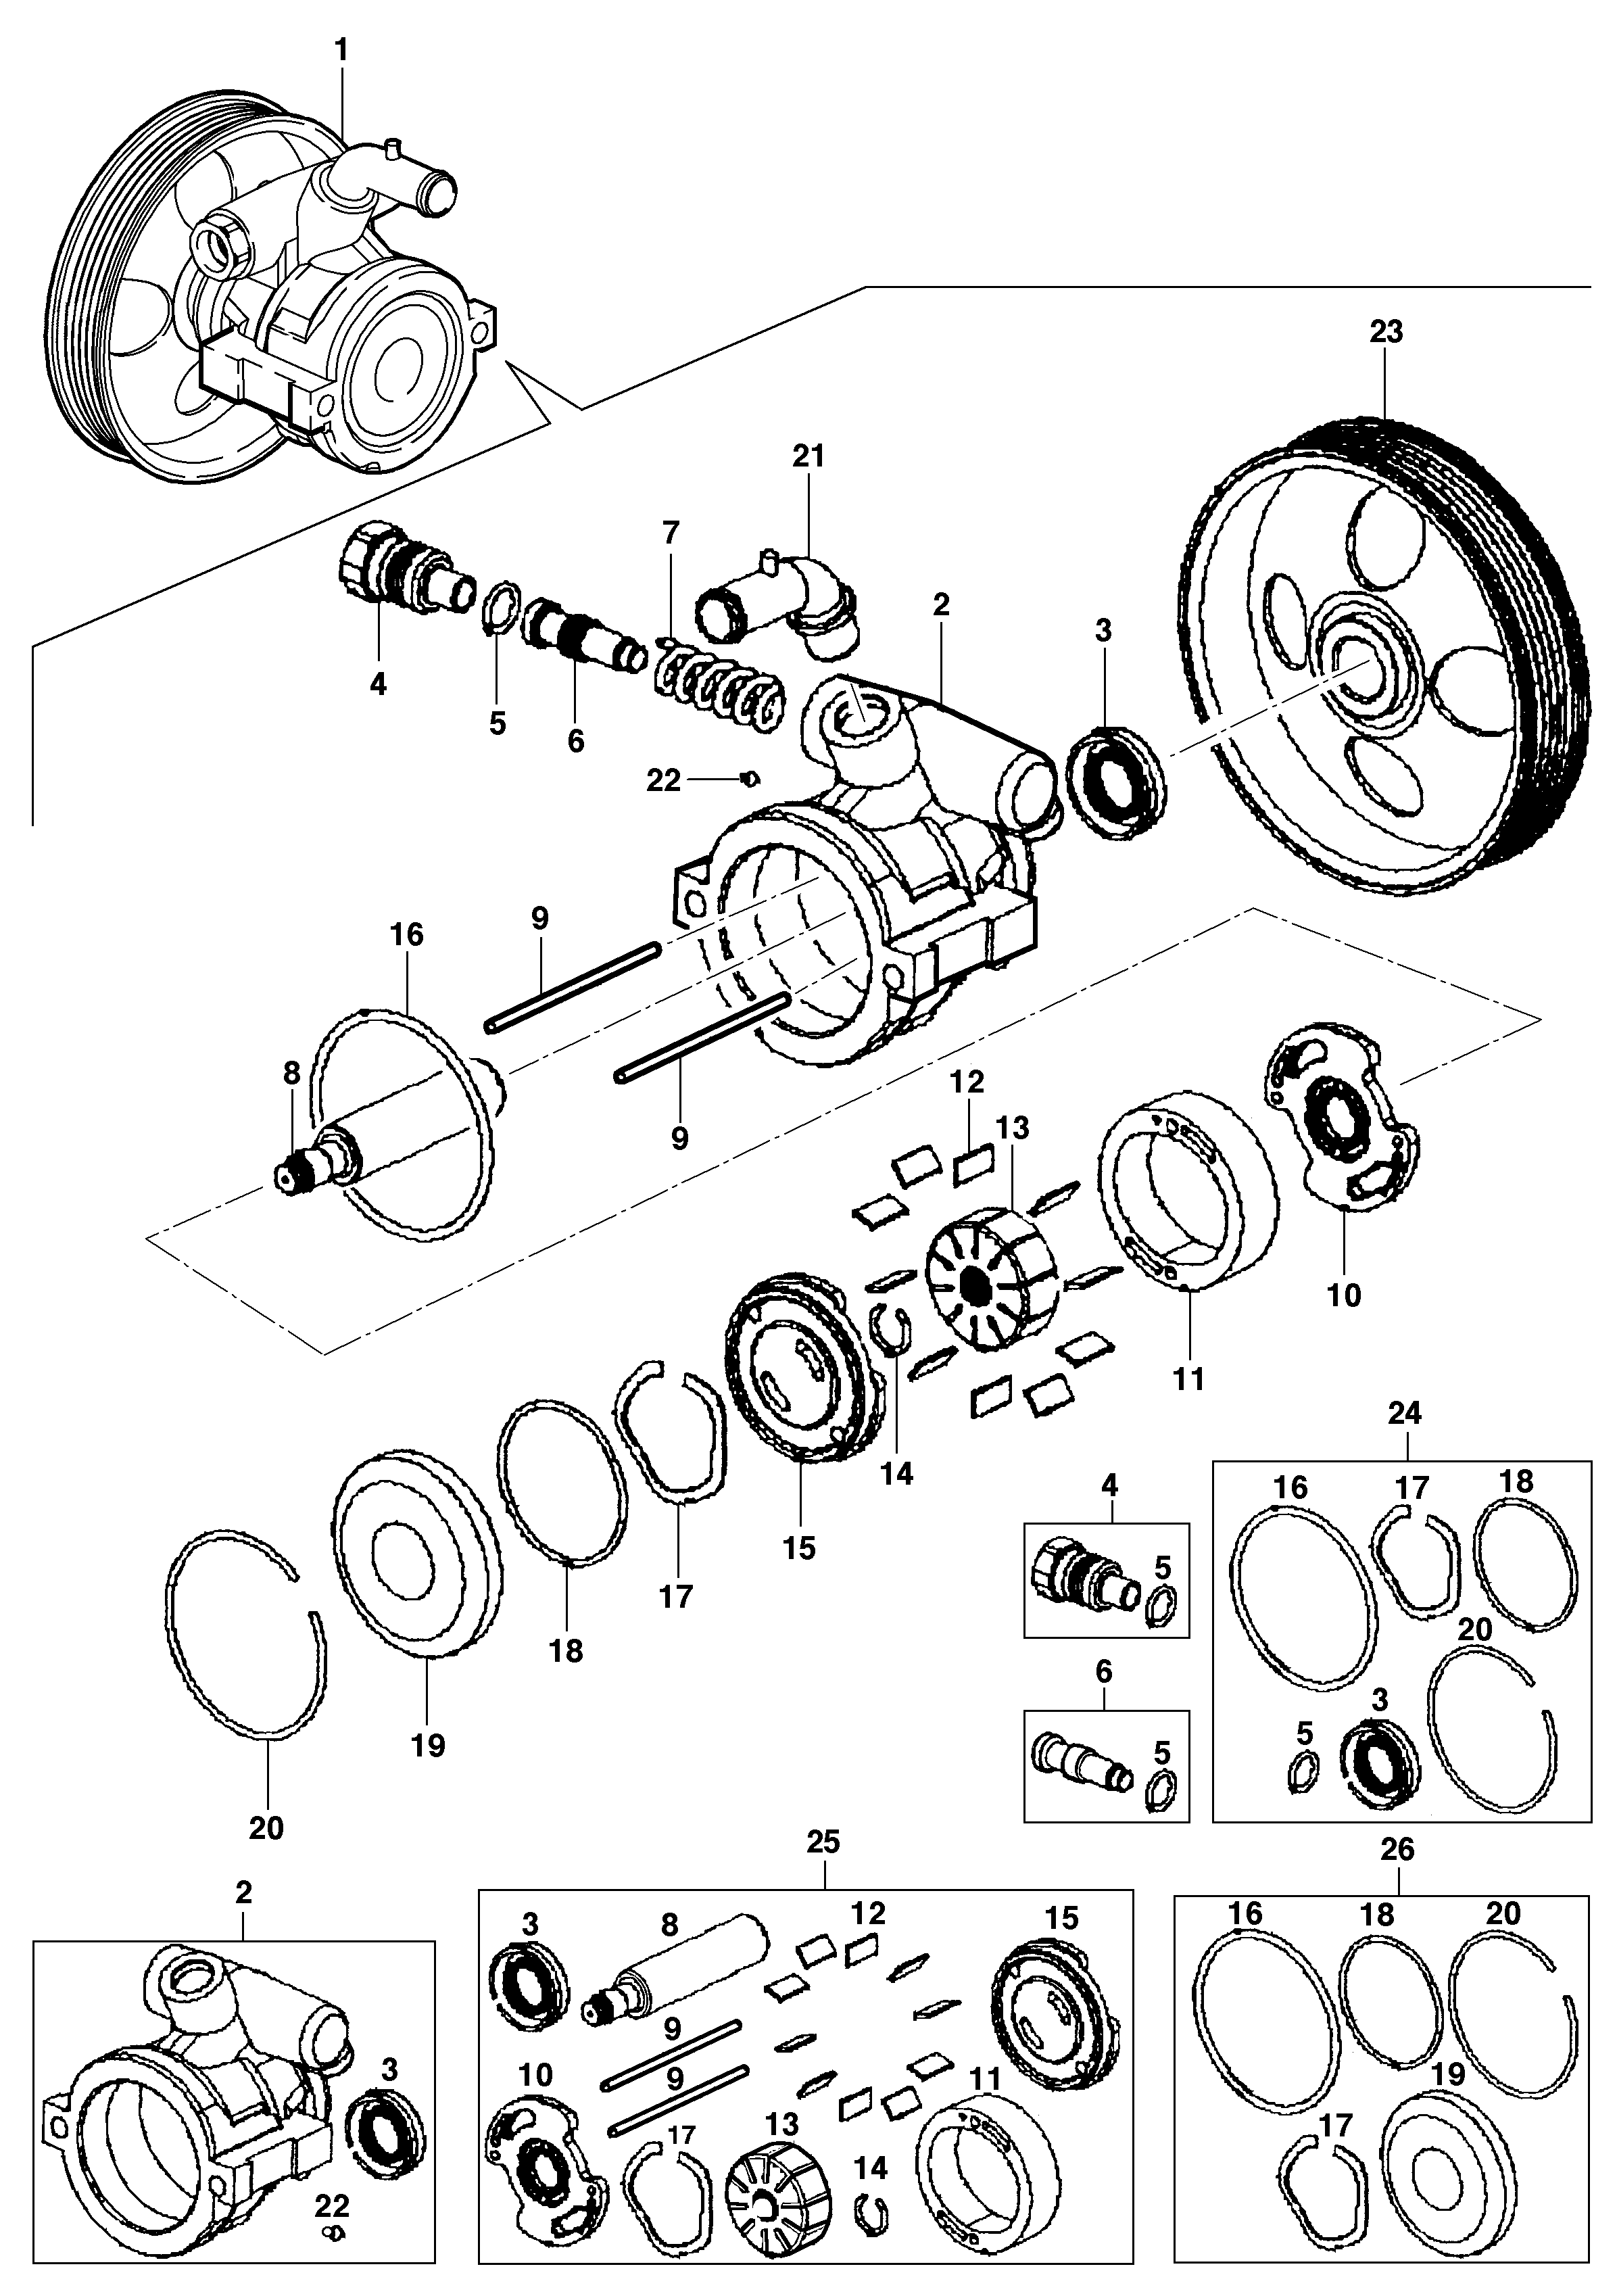 Power steering pump - internal components